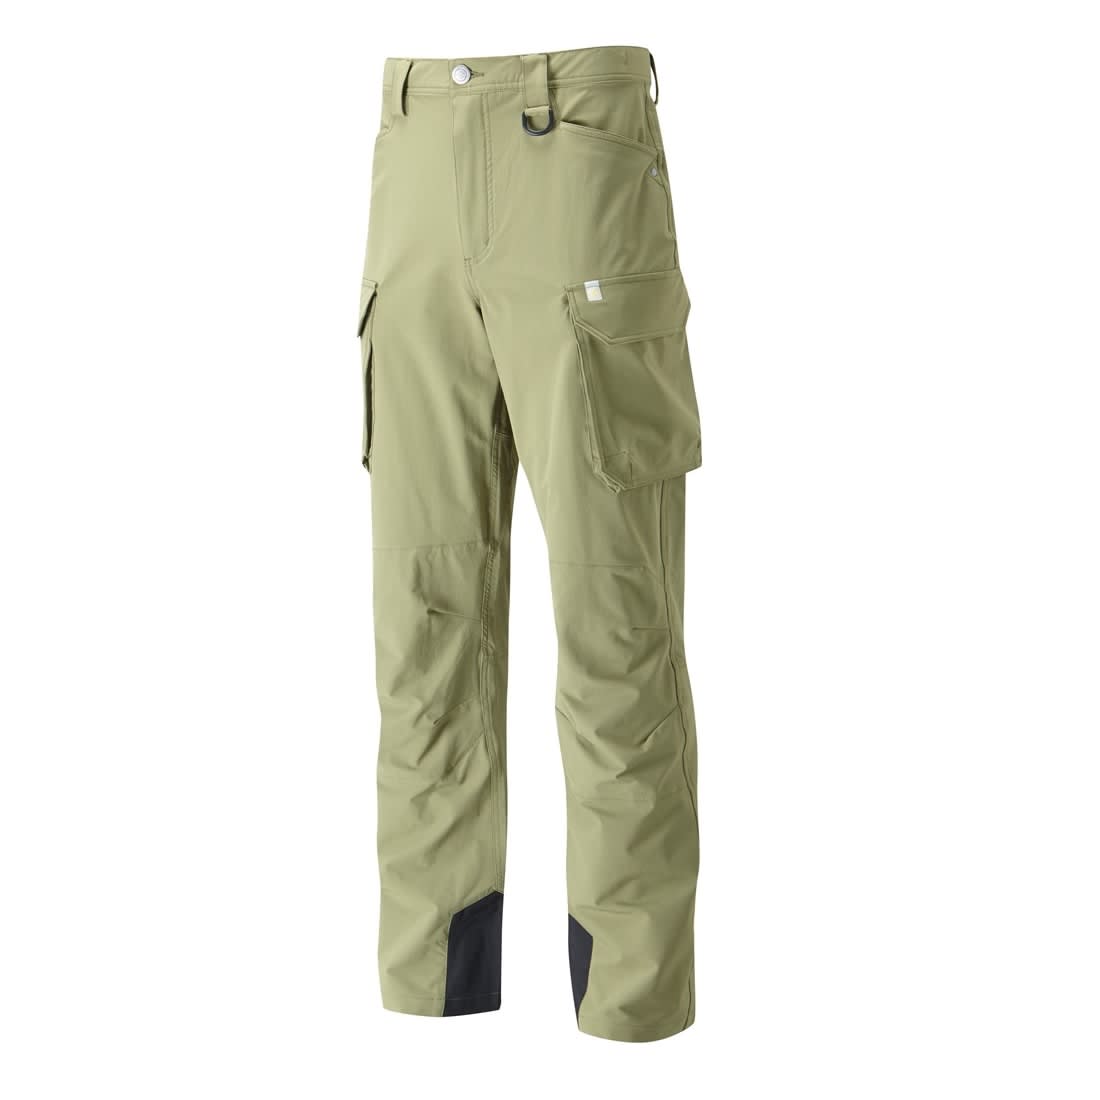 Wychwood kalhoty Cargo Pant zelené, vel.L 